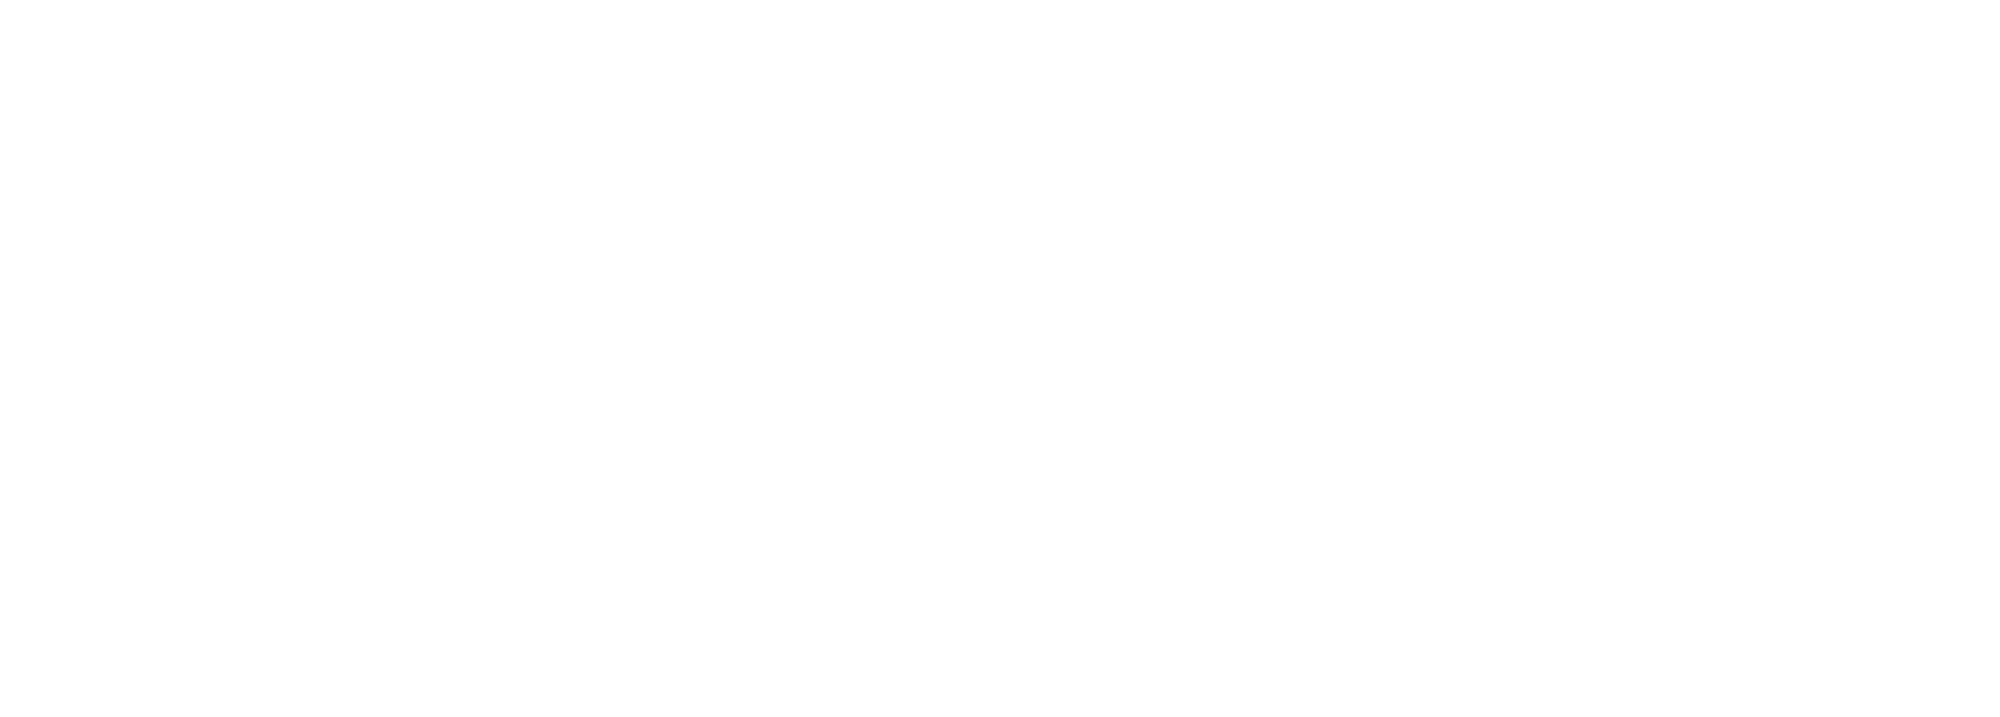 Eco-pi by MedPaper logo